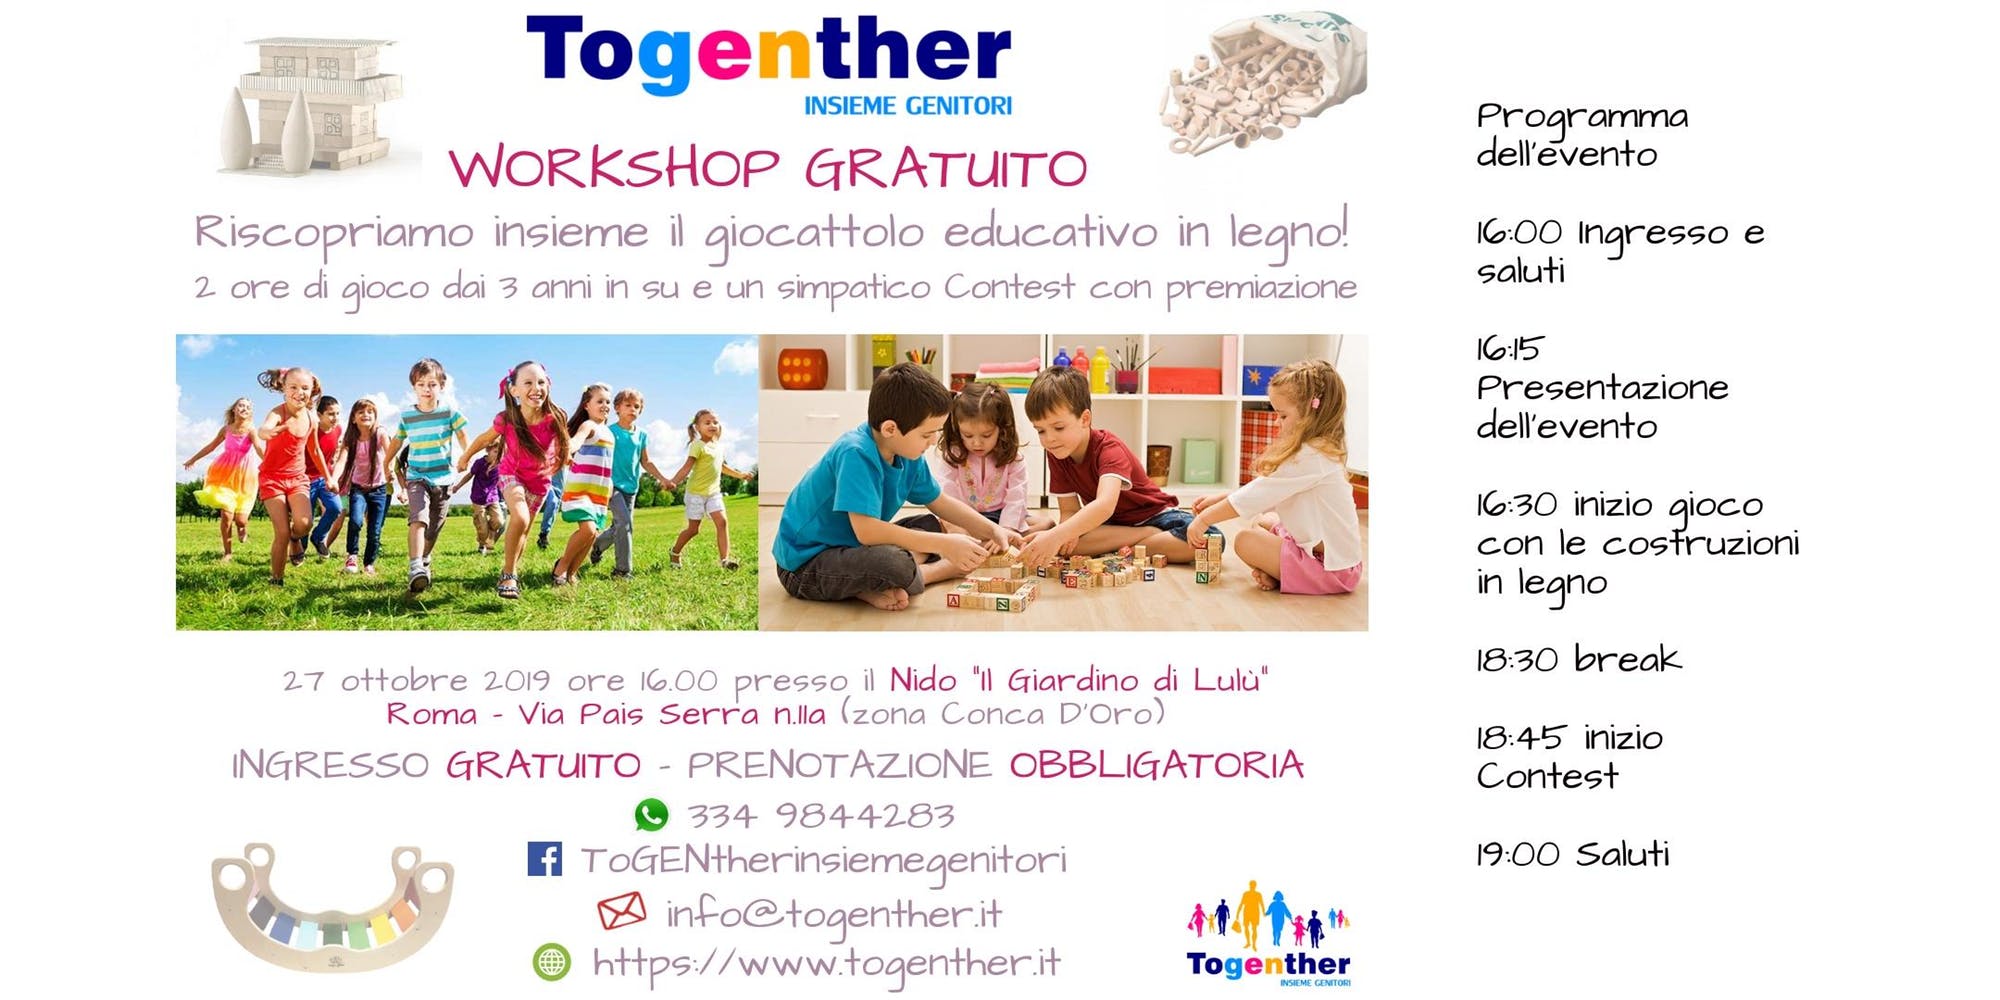 evento gratuito per bambini a roma weekend